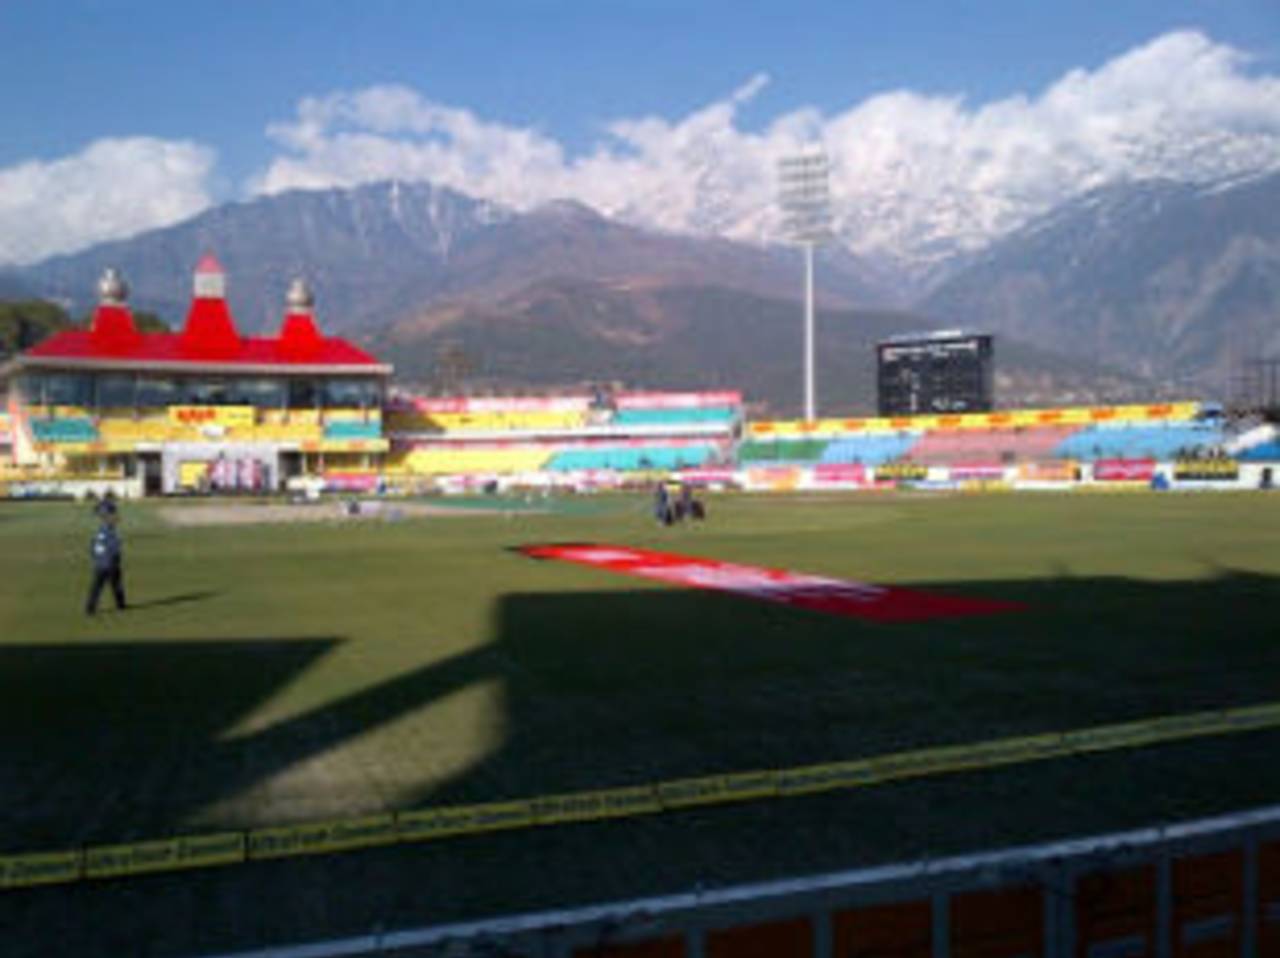 Dharamsala cricket ground before India v England ODI on January 25, 2013